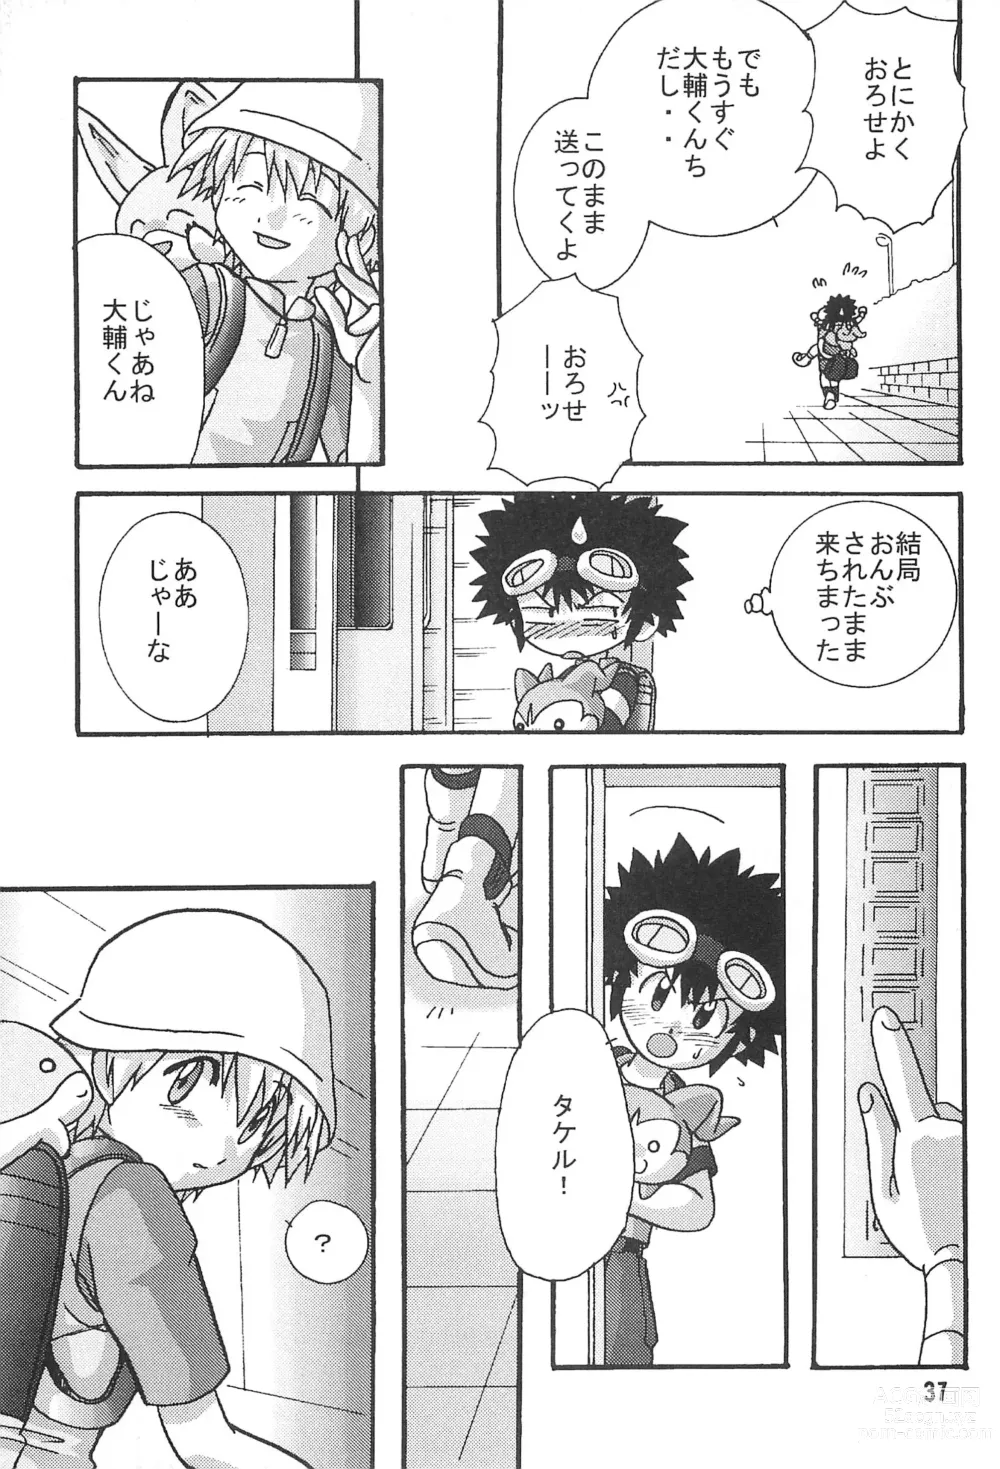 Page 37 of doujinshi SUBTLE RELATION